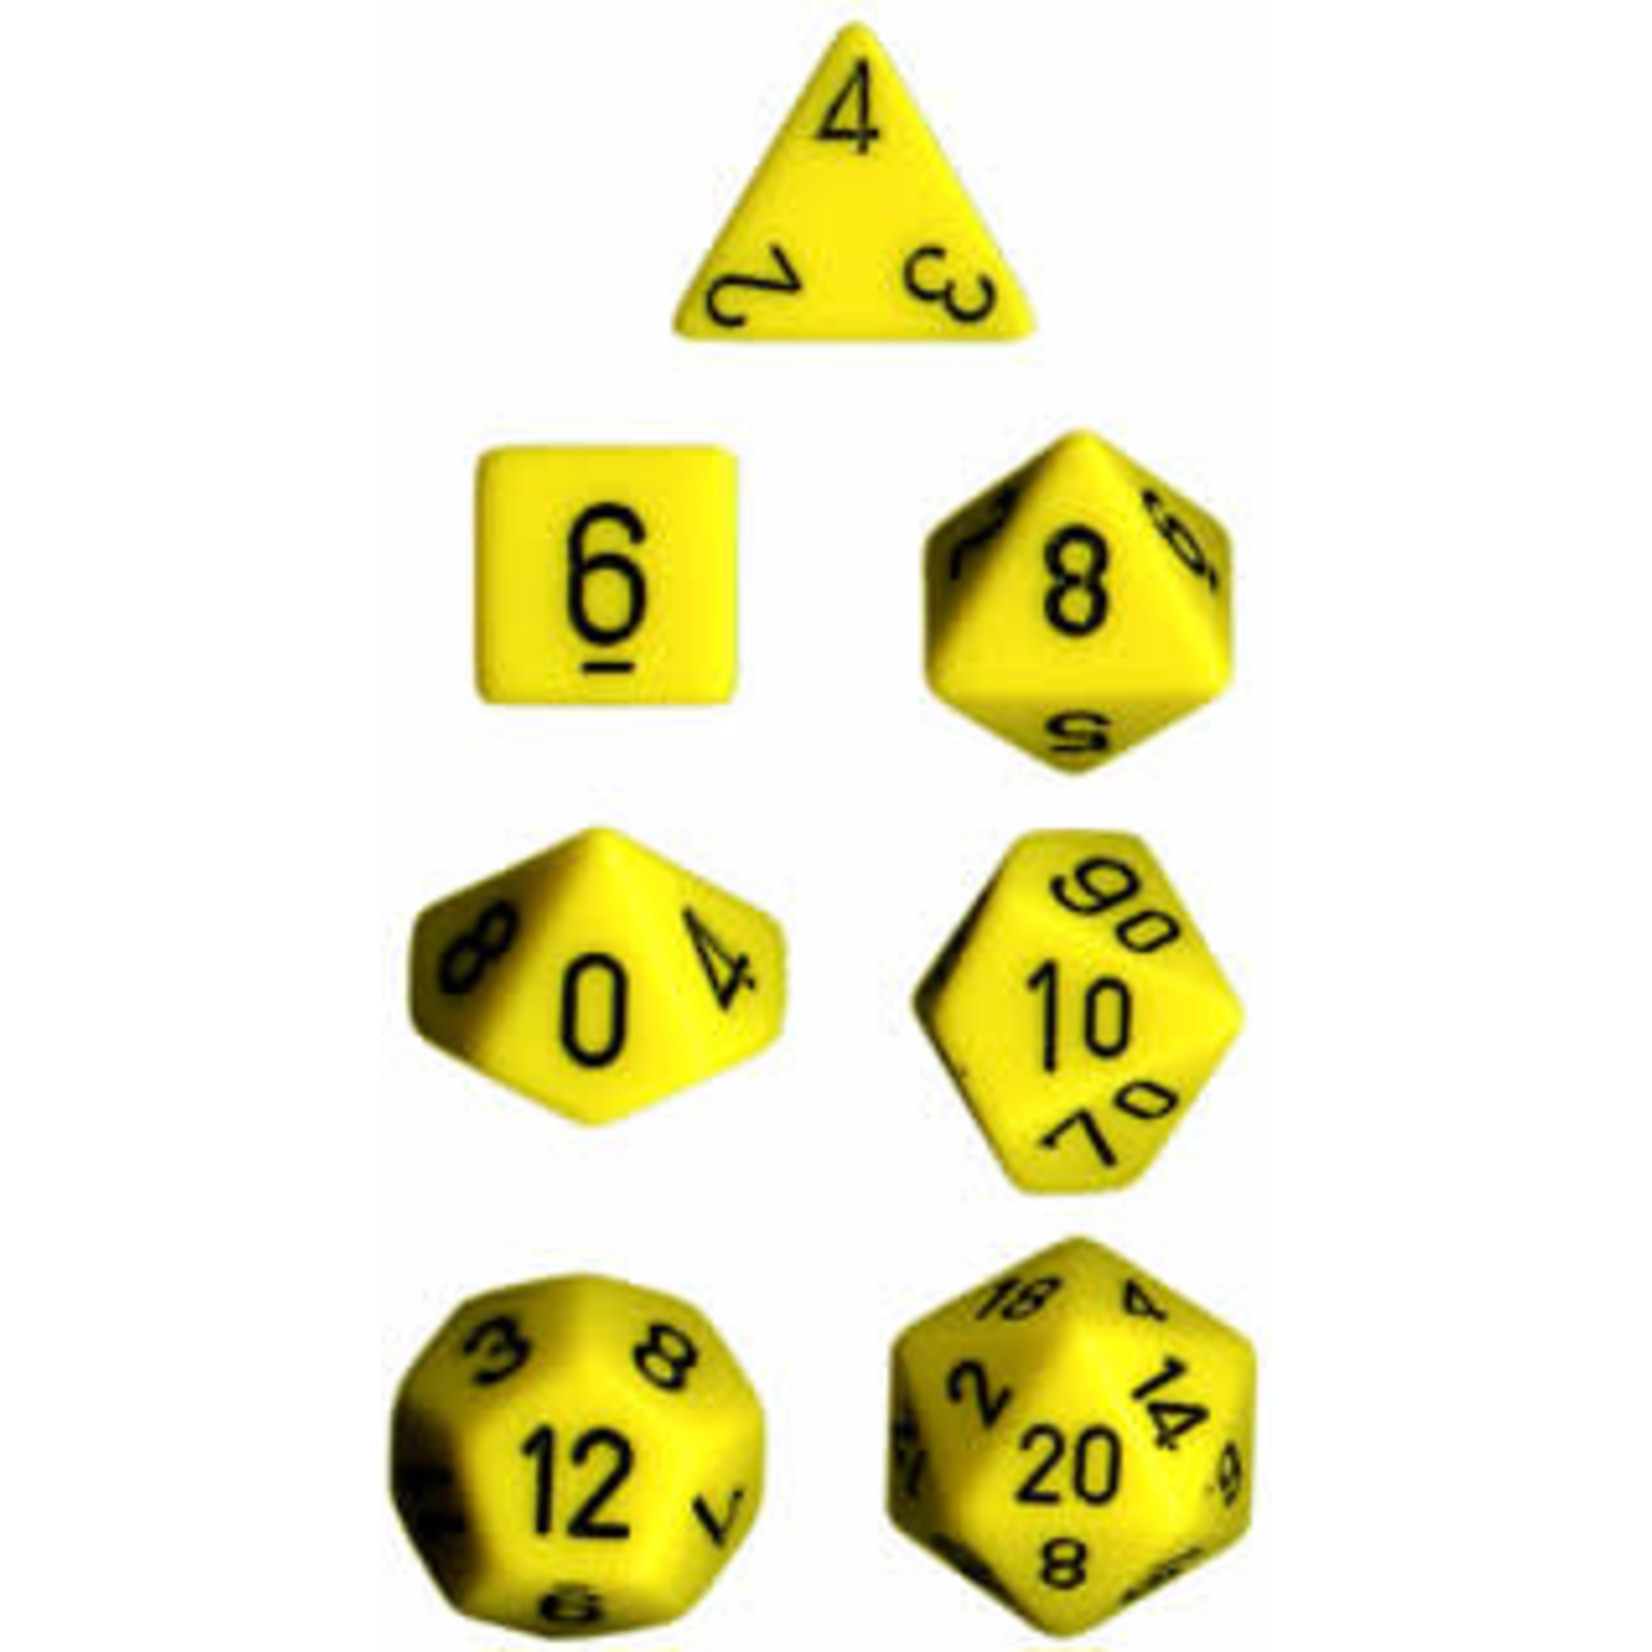 Chessex Opaque Yellow/black 7 die set